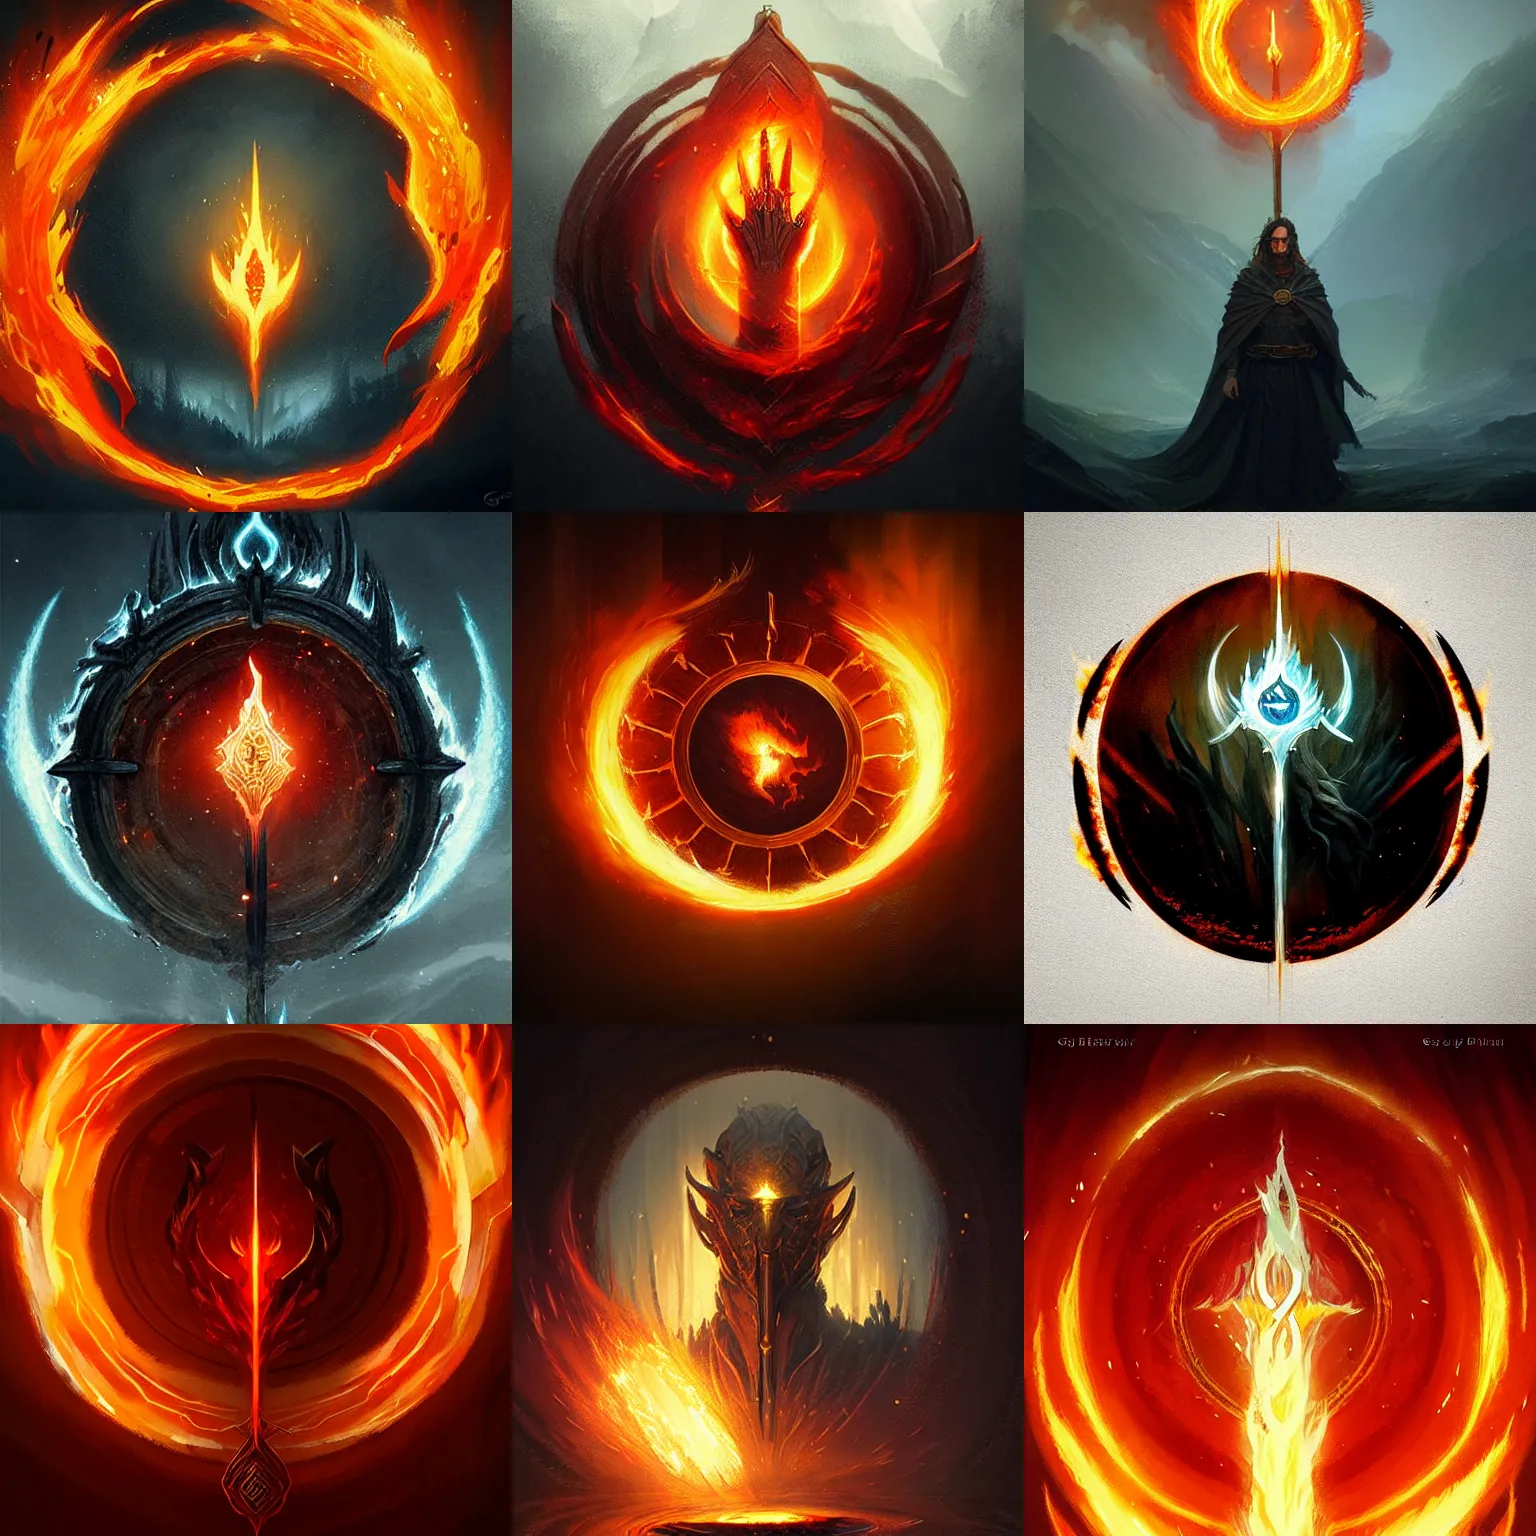 Prompt: holy fire spell art, elden ring style, fantasy game spell icon, by greg rutkowski